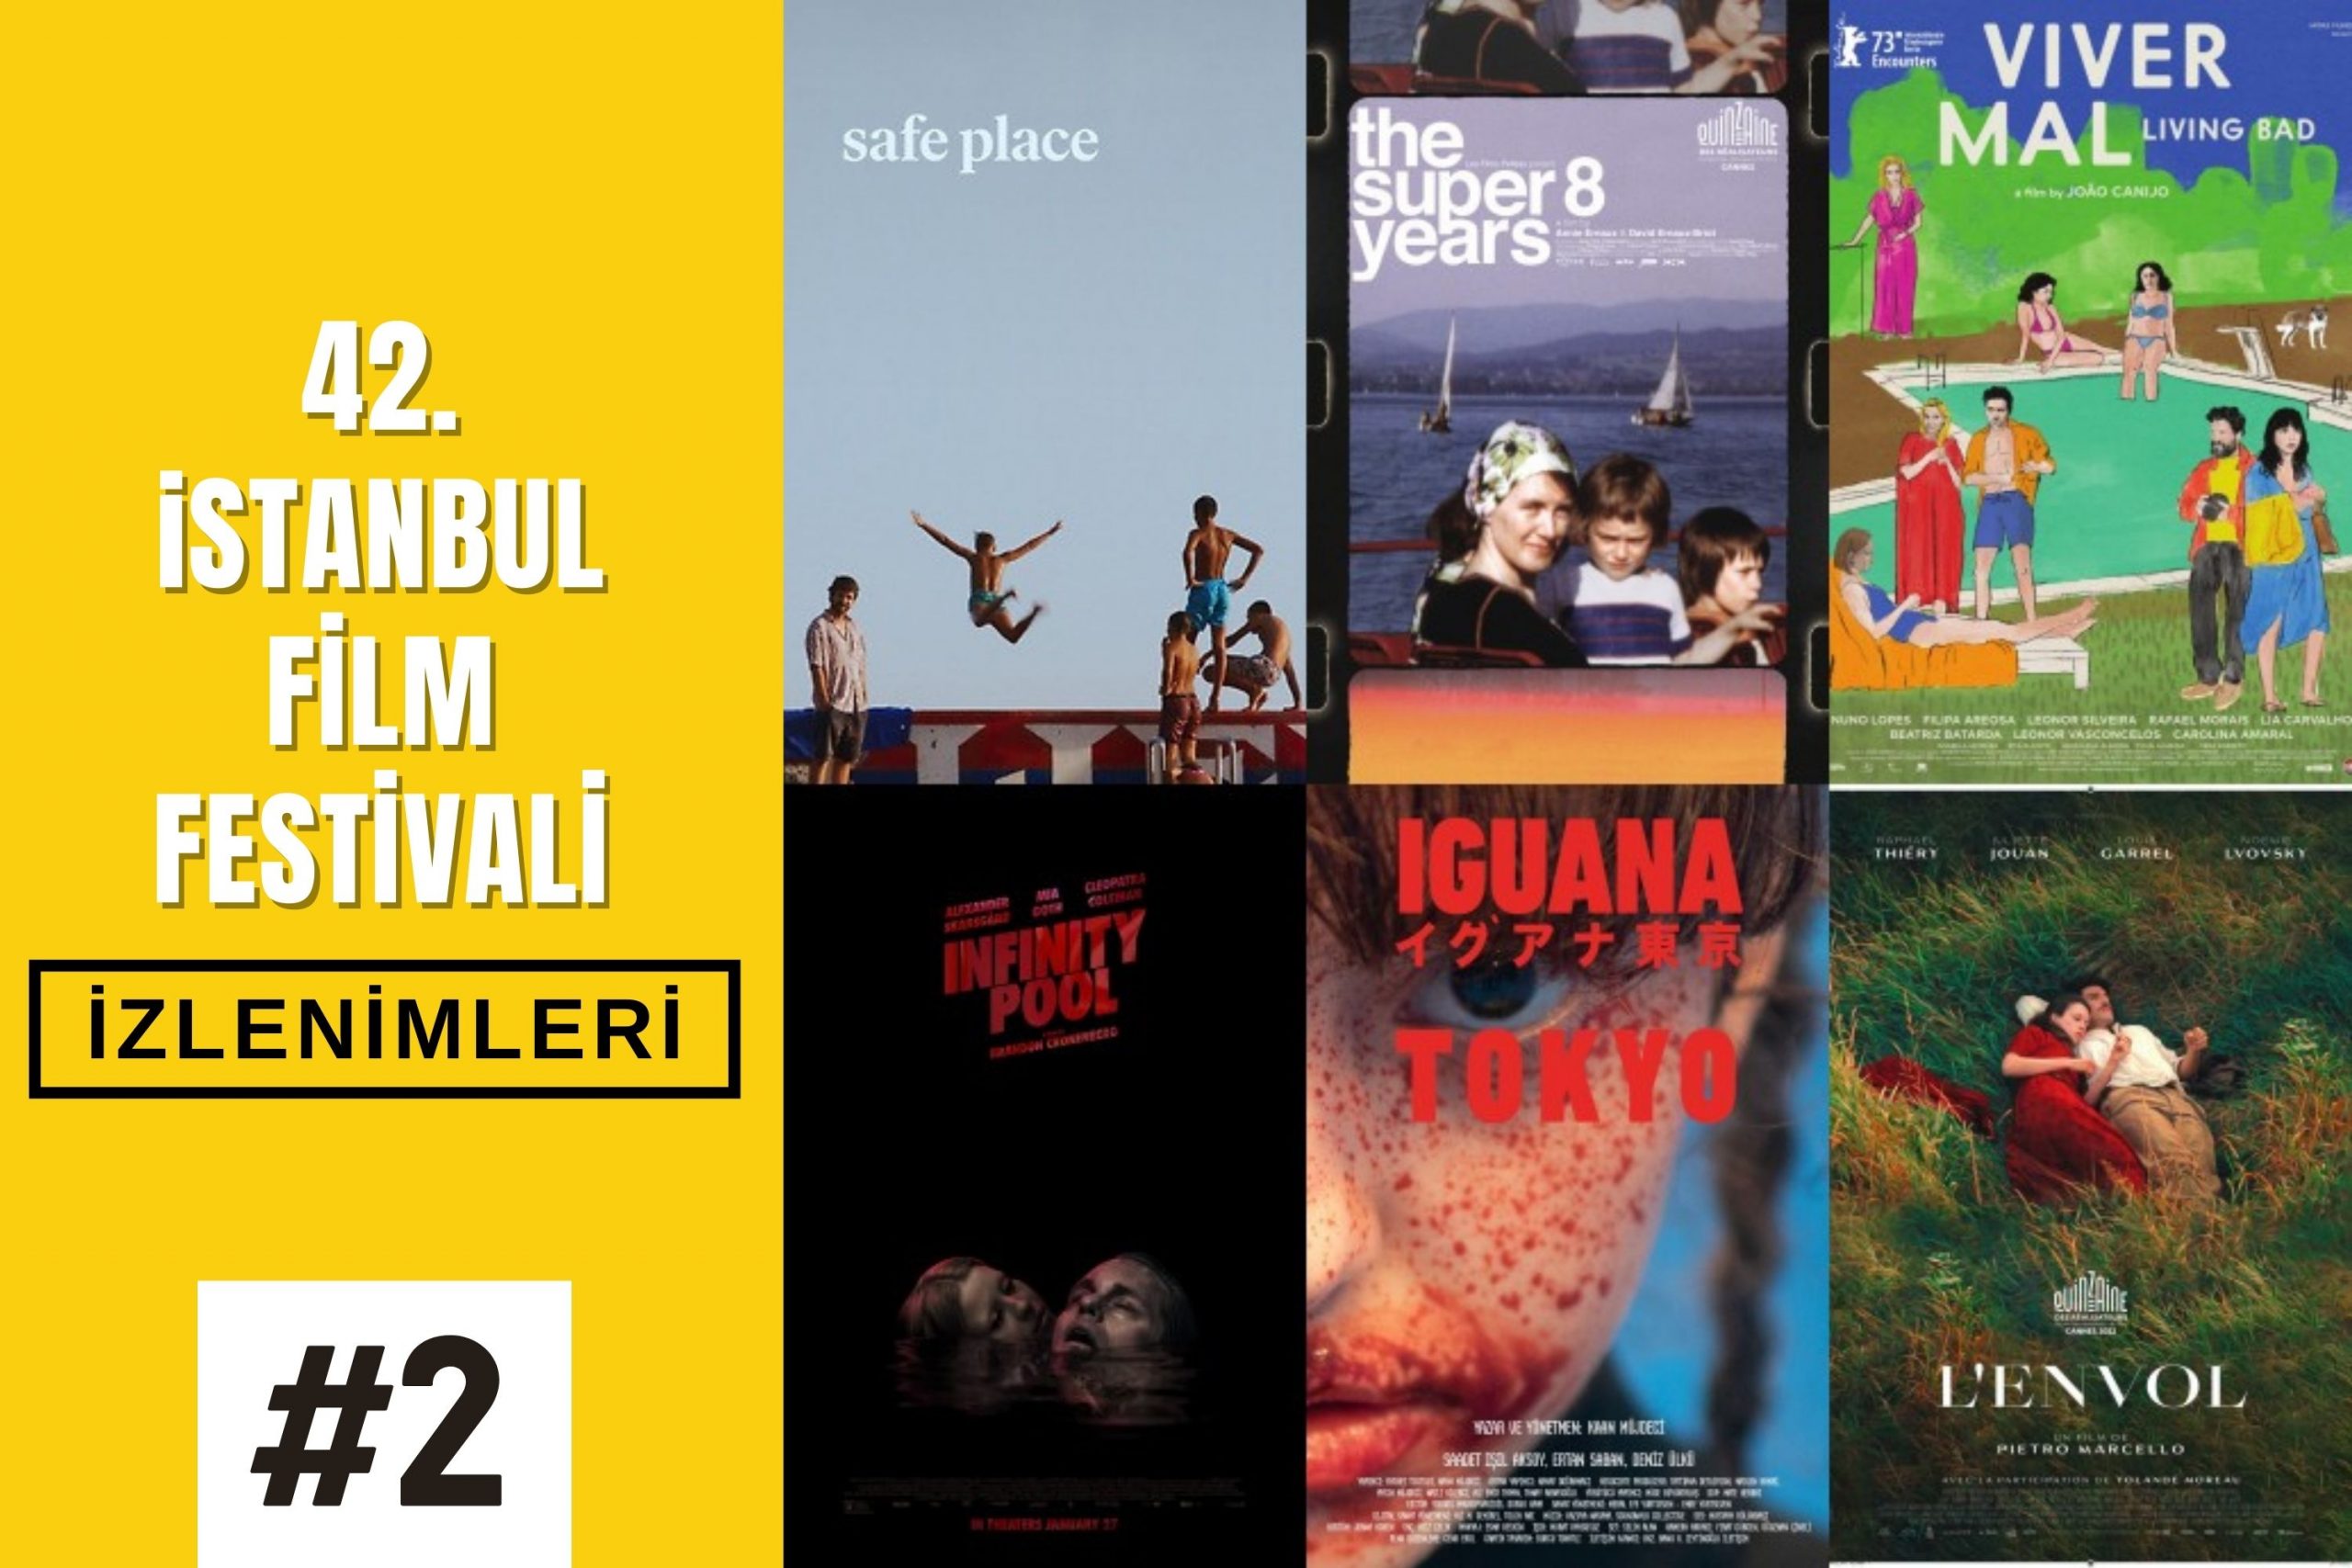 42. İstanbul Film Festivali İzlenimleri #2